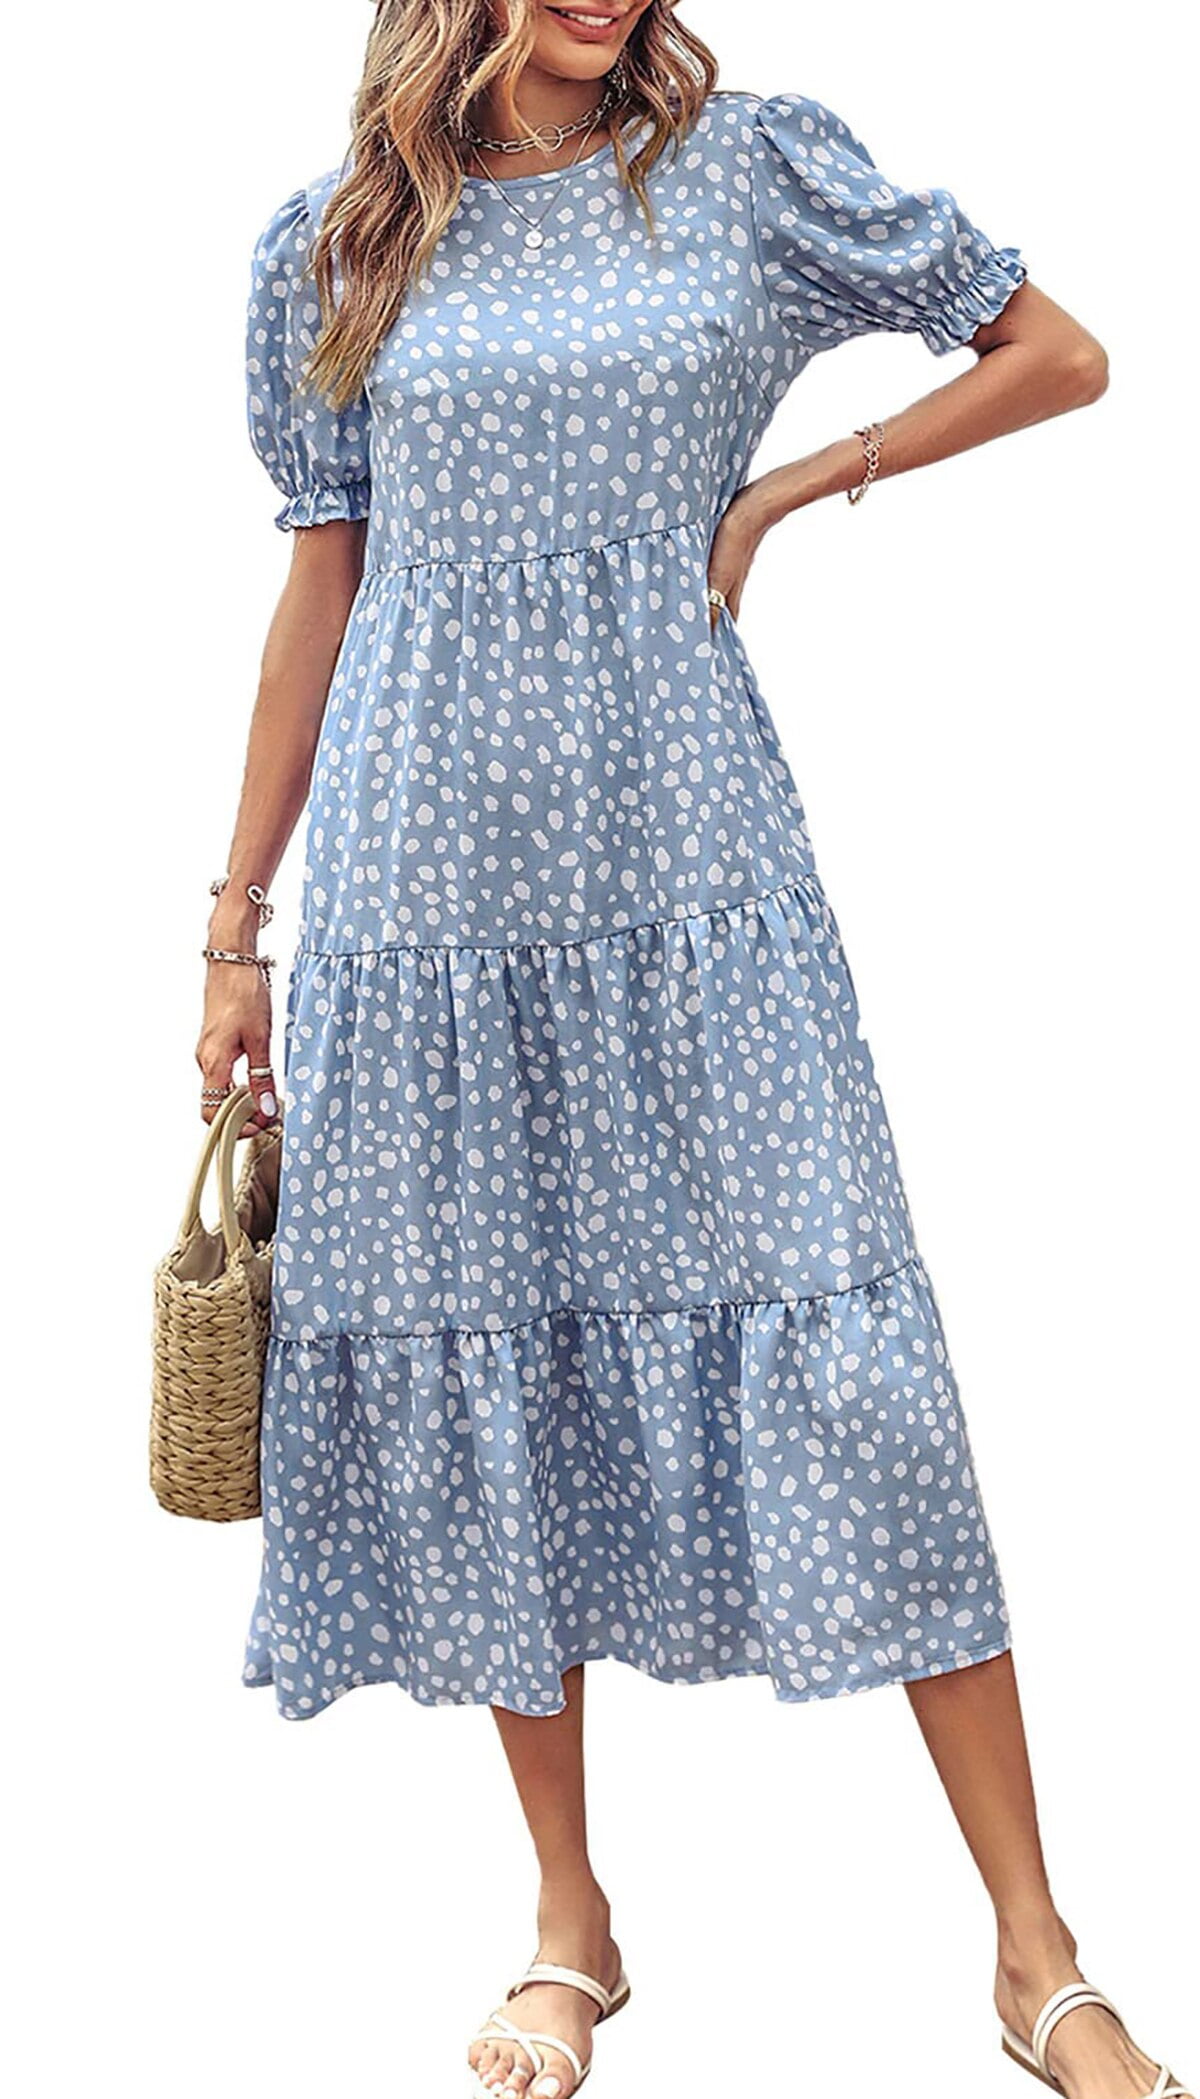 Fantaslook Dresses for Women Summer Casual Boho Dress Floral Print Puff ...